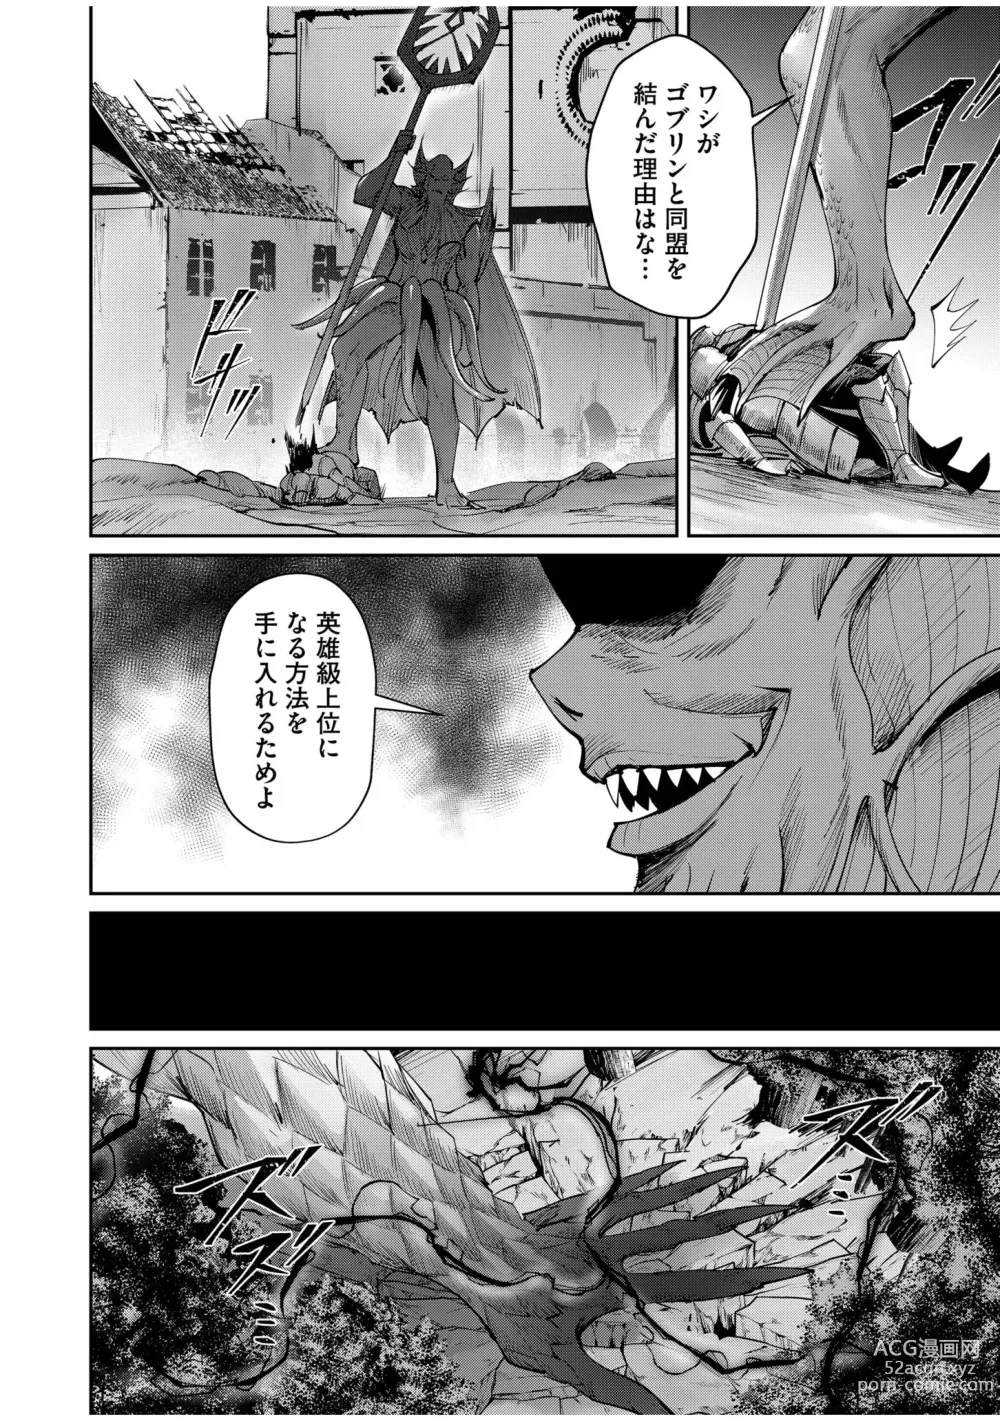 Page 10 of manga Kichiku Eiyuu Vol.07